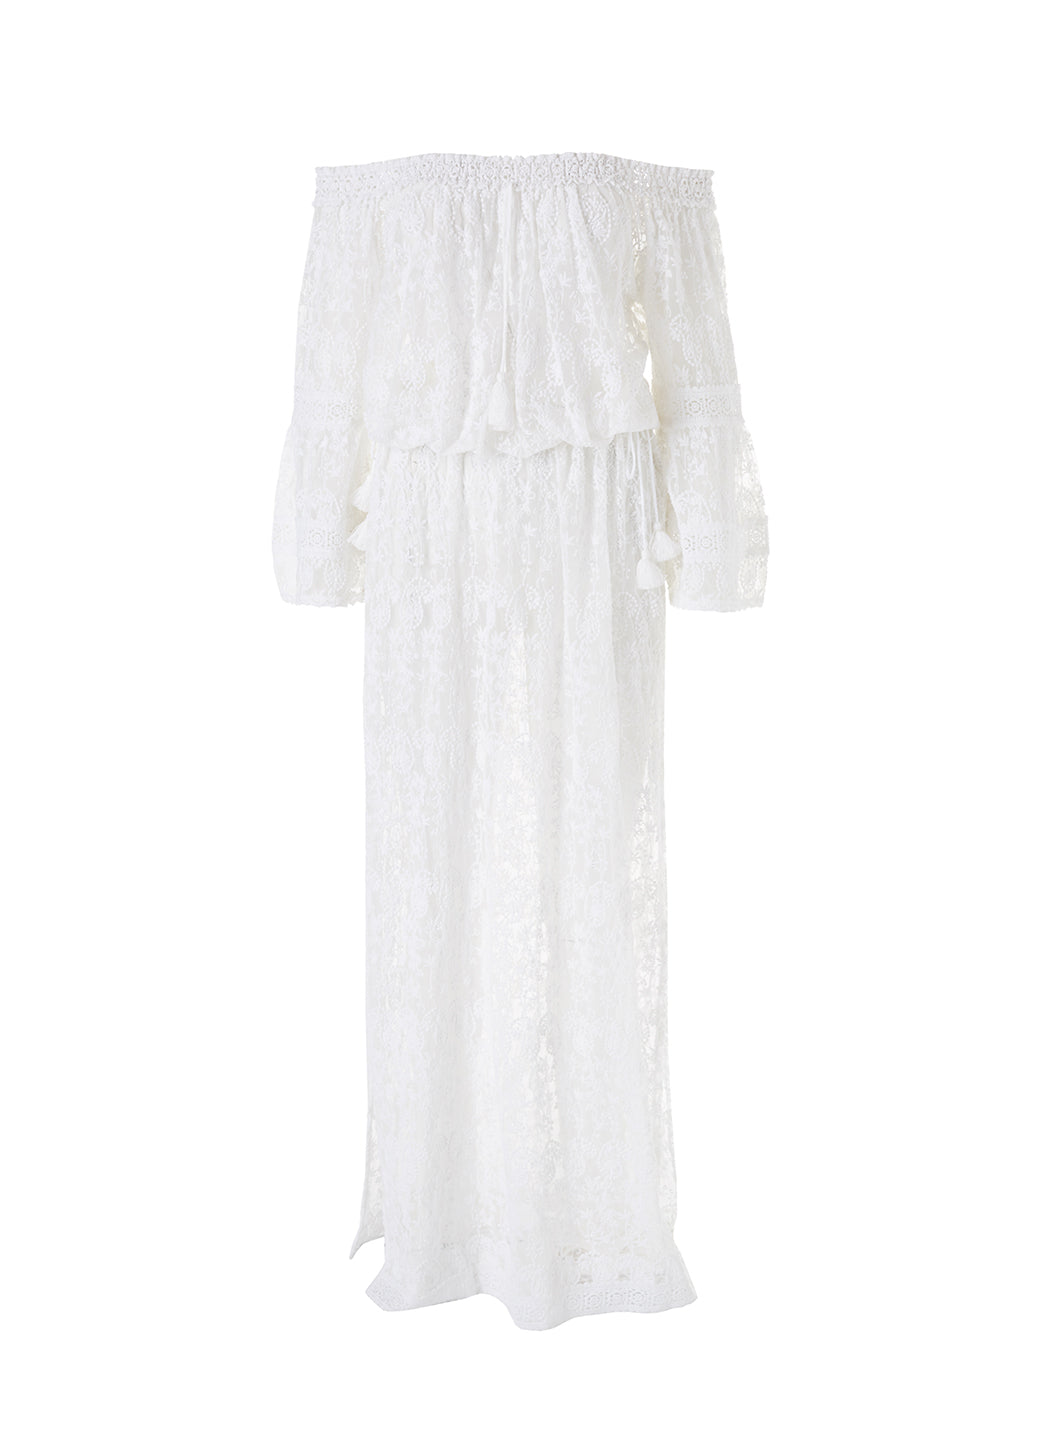 White Long Beach Dress – Fashion dresses